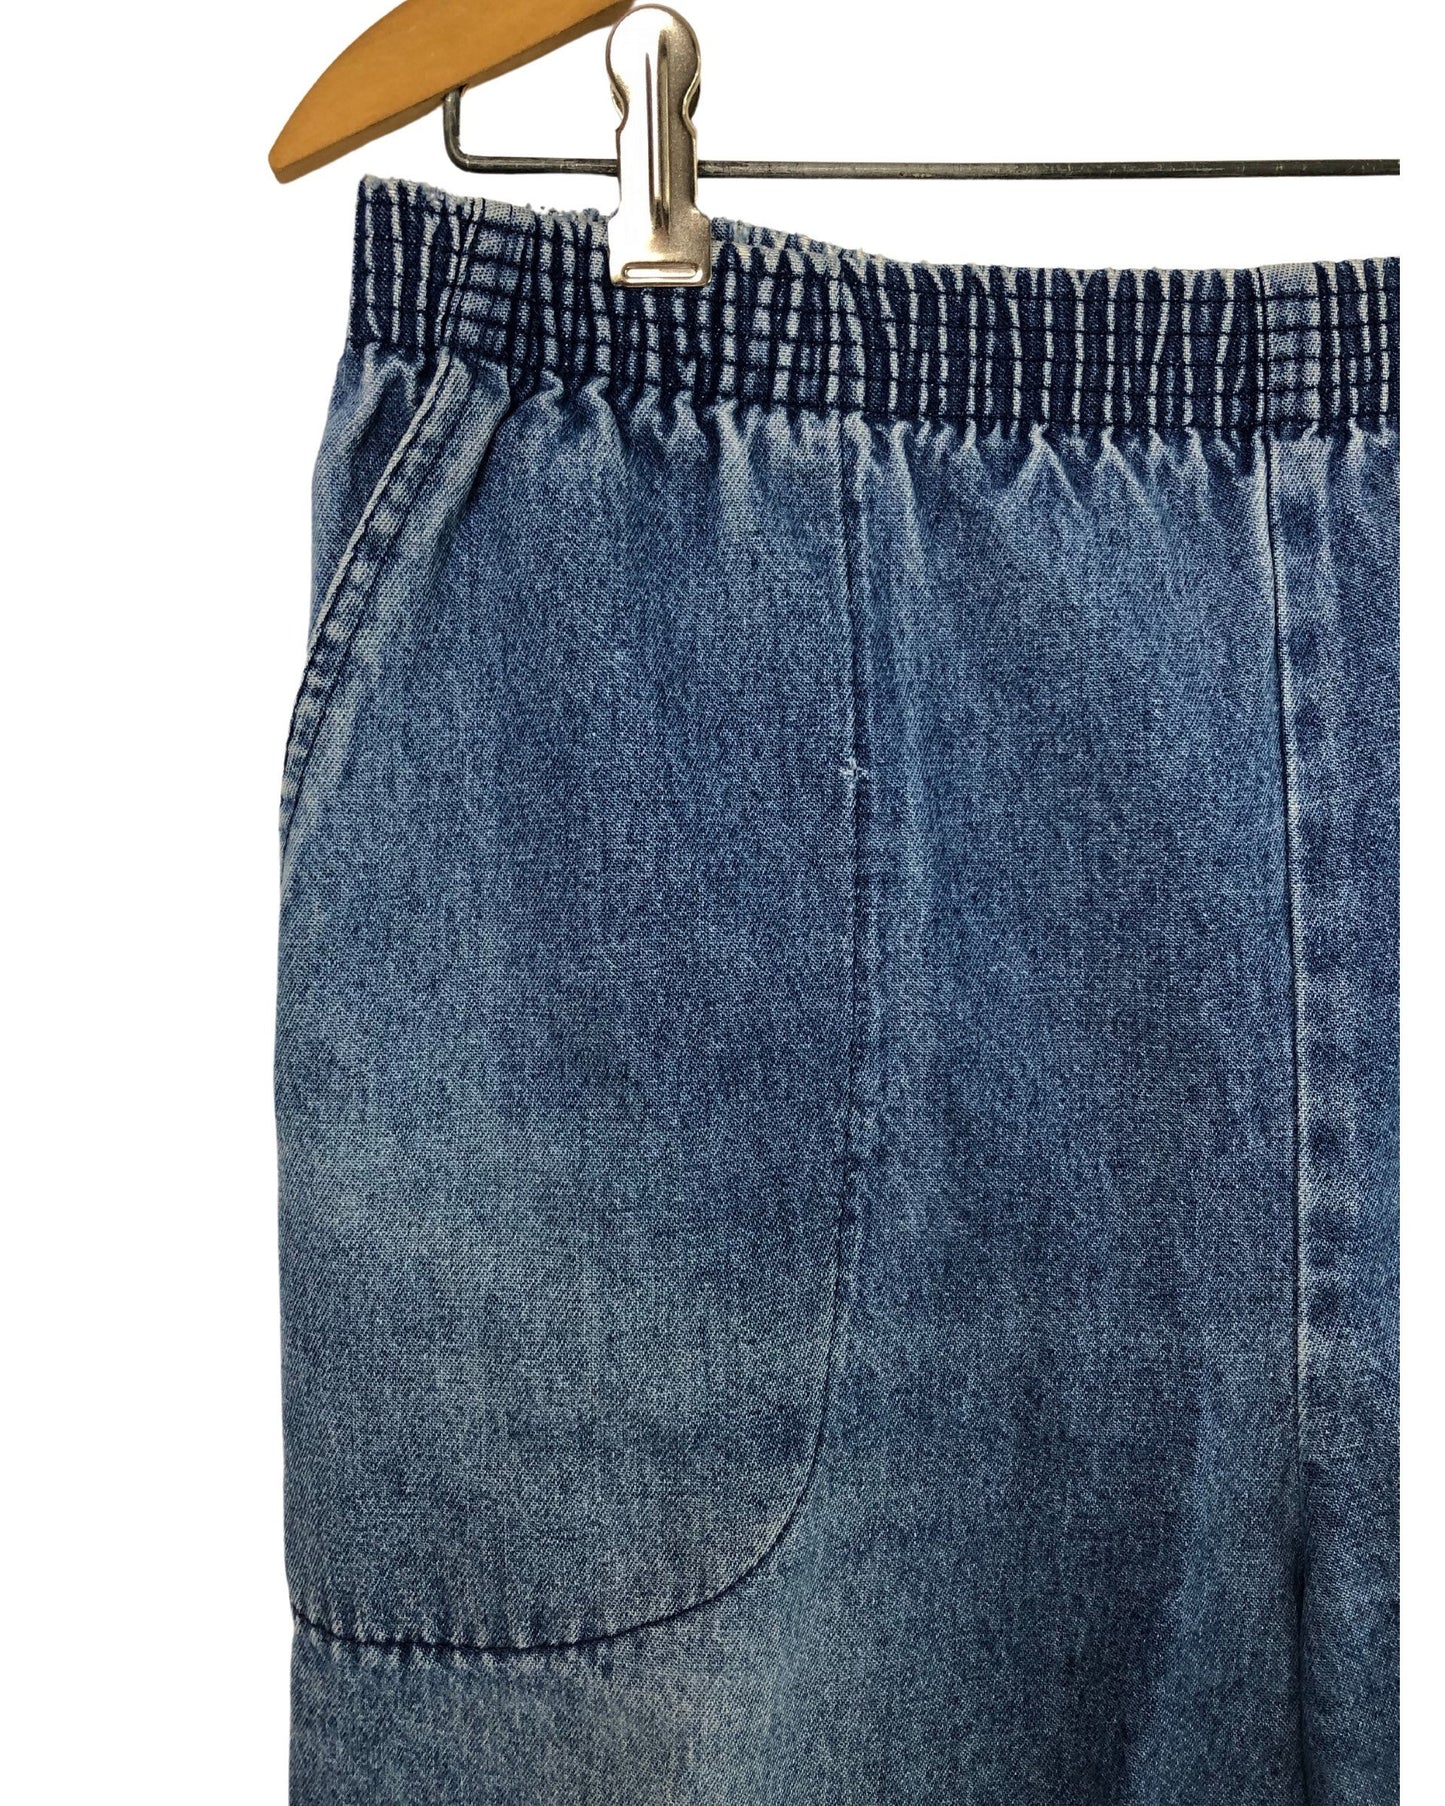 Wms Vintage 80’s Plus Size Denim Cutoff Full Elastic Jean Shorts Size 1X